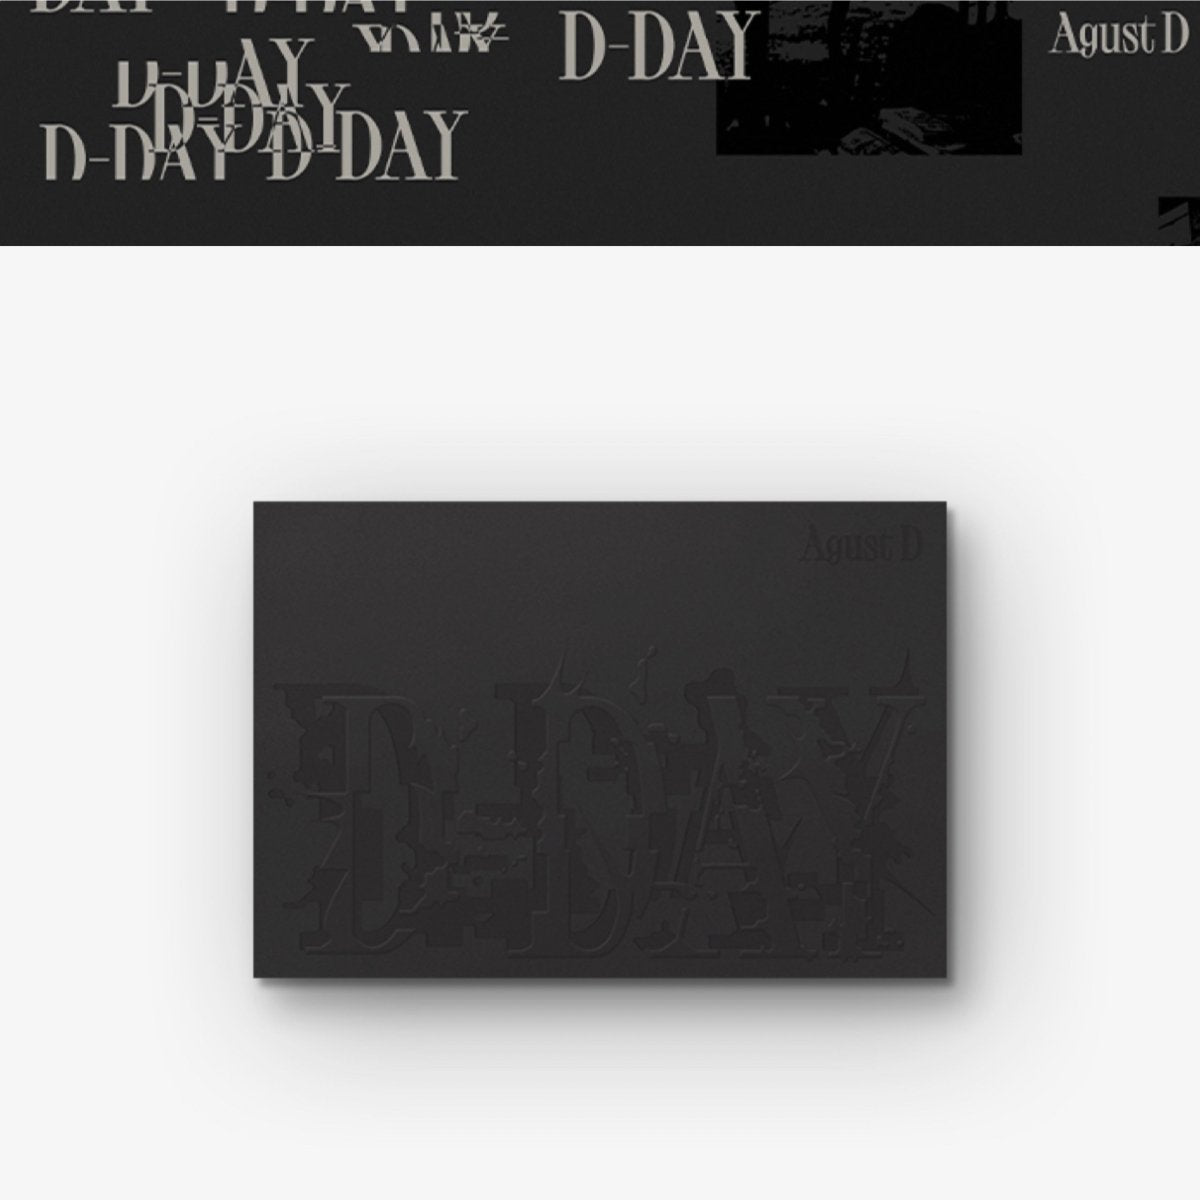 Smart Album] SUGA (Agust D) Solo Album - D-DAY Weverse Albums ver